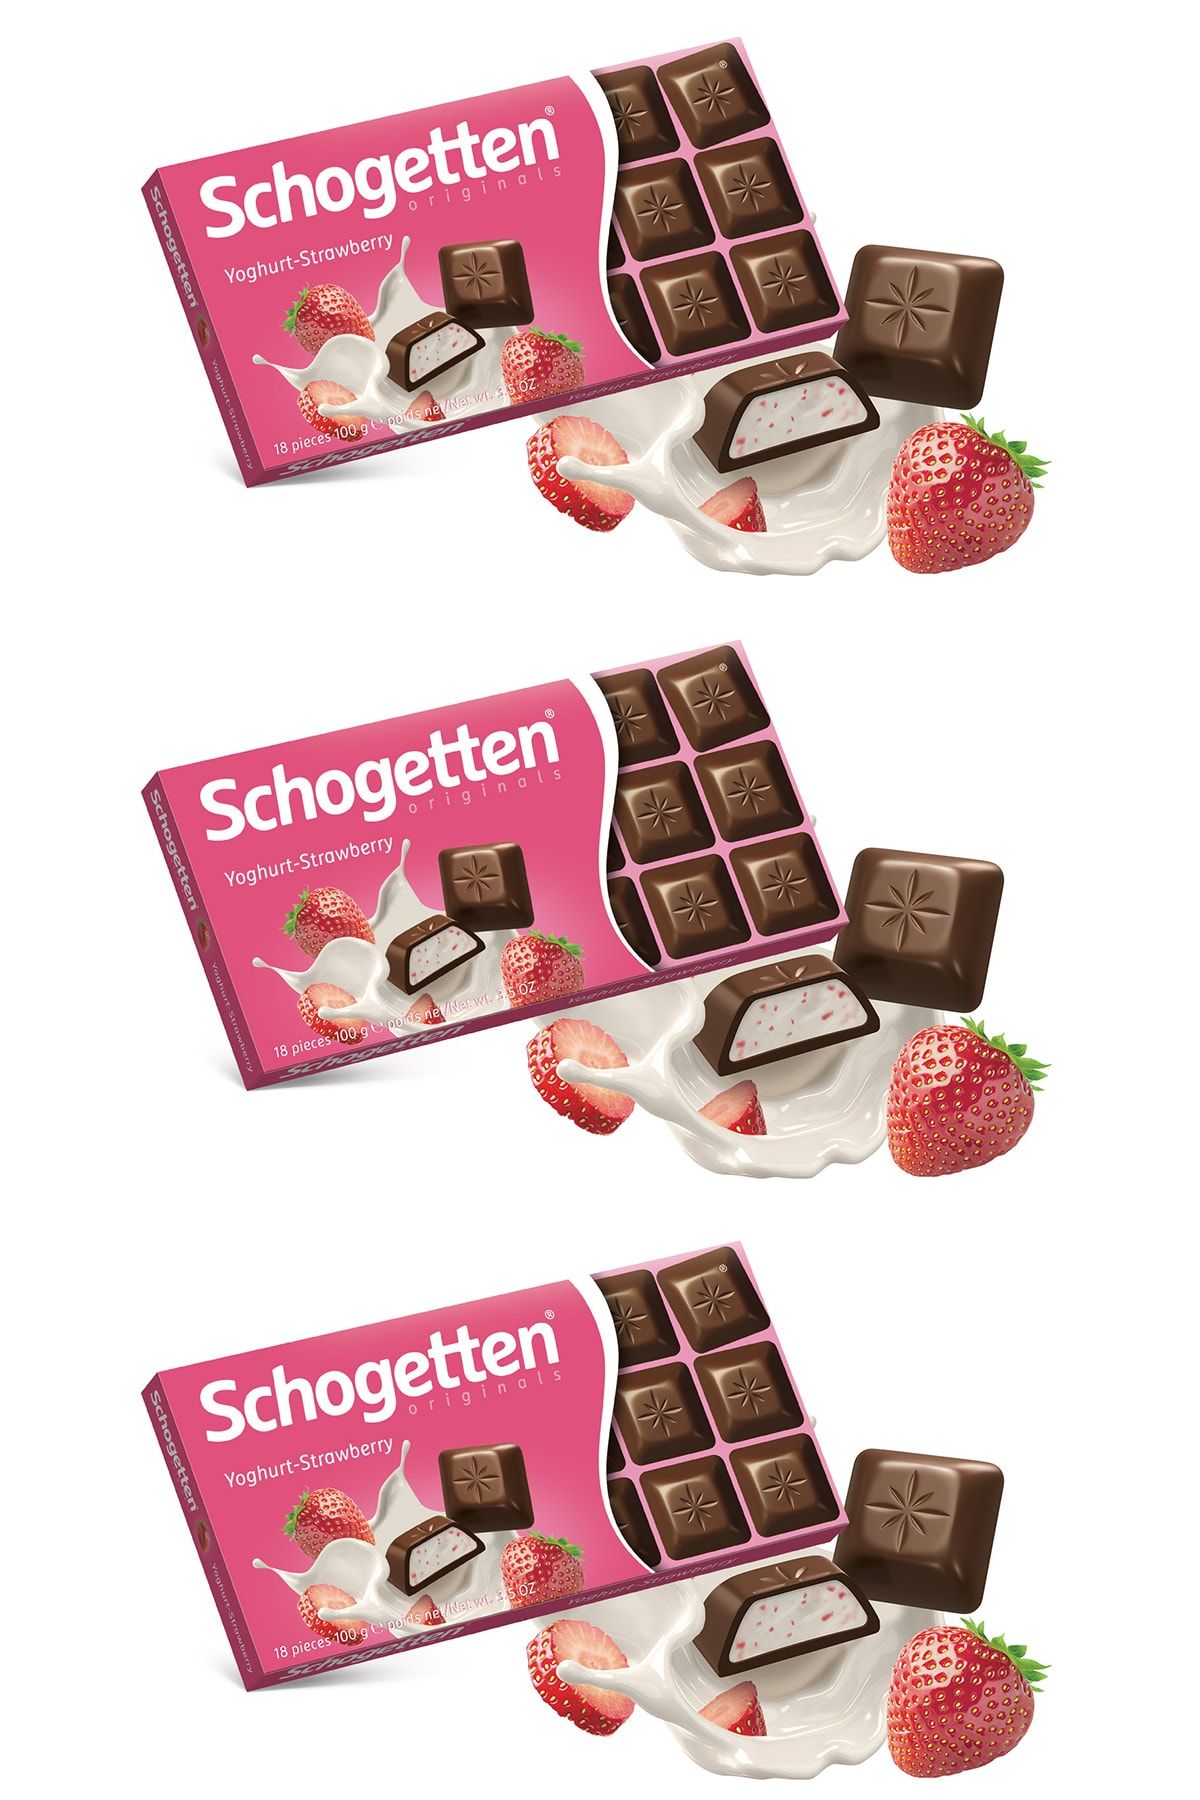 Schogetten Trilogia Çilekli-yoğurtlu Çikolata 100g - 3 Adet